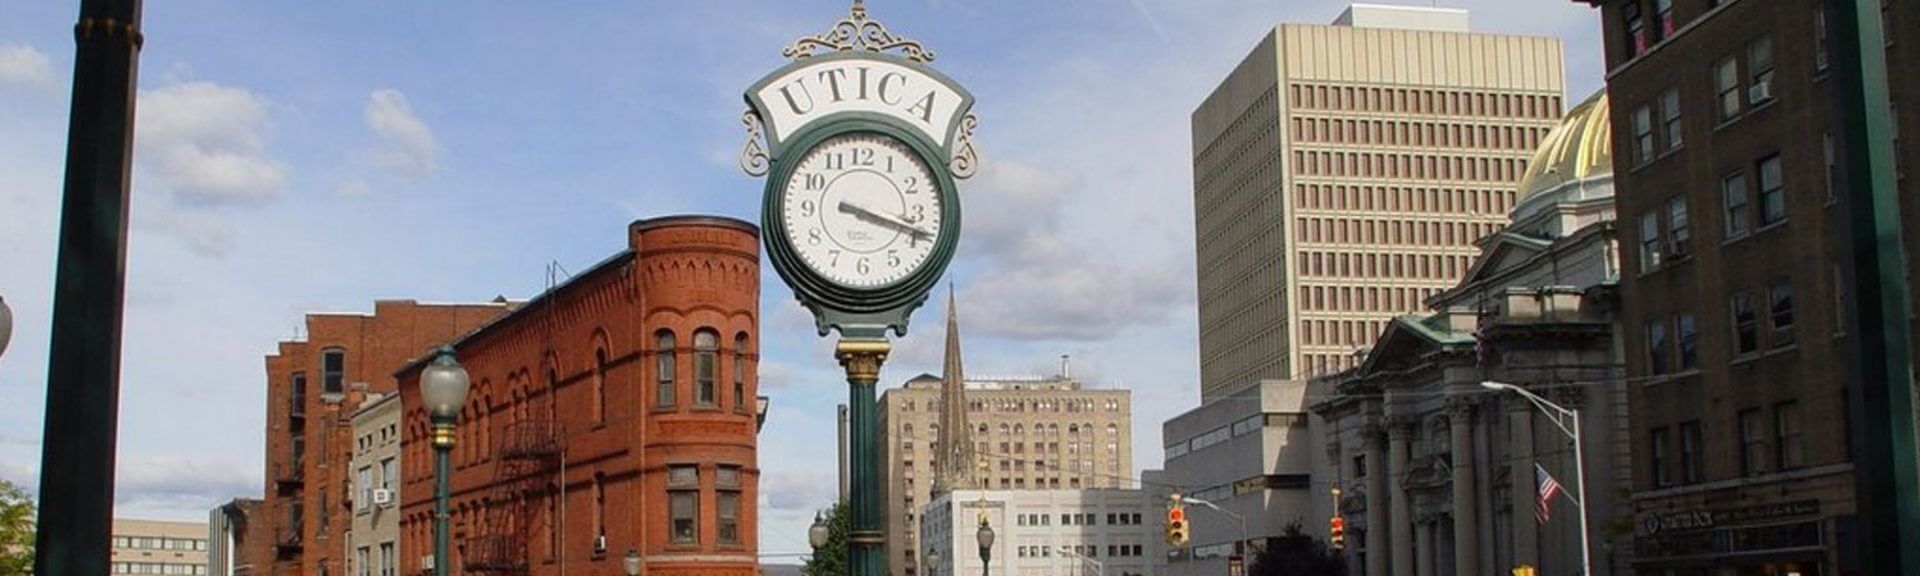 Utica Clock in upstate New York